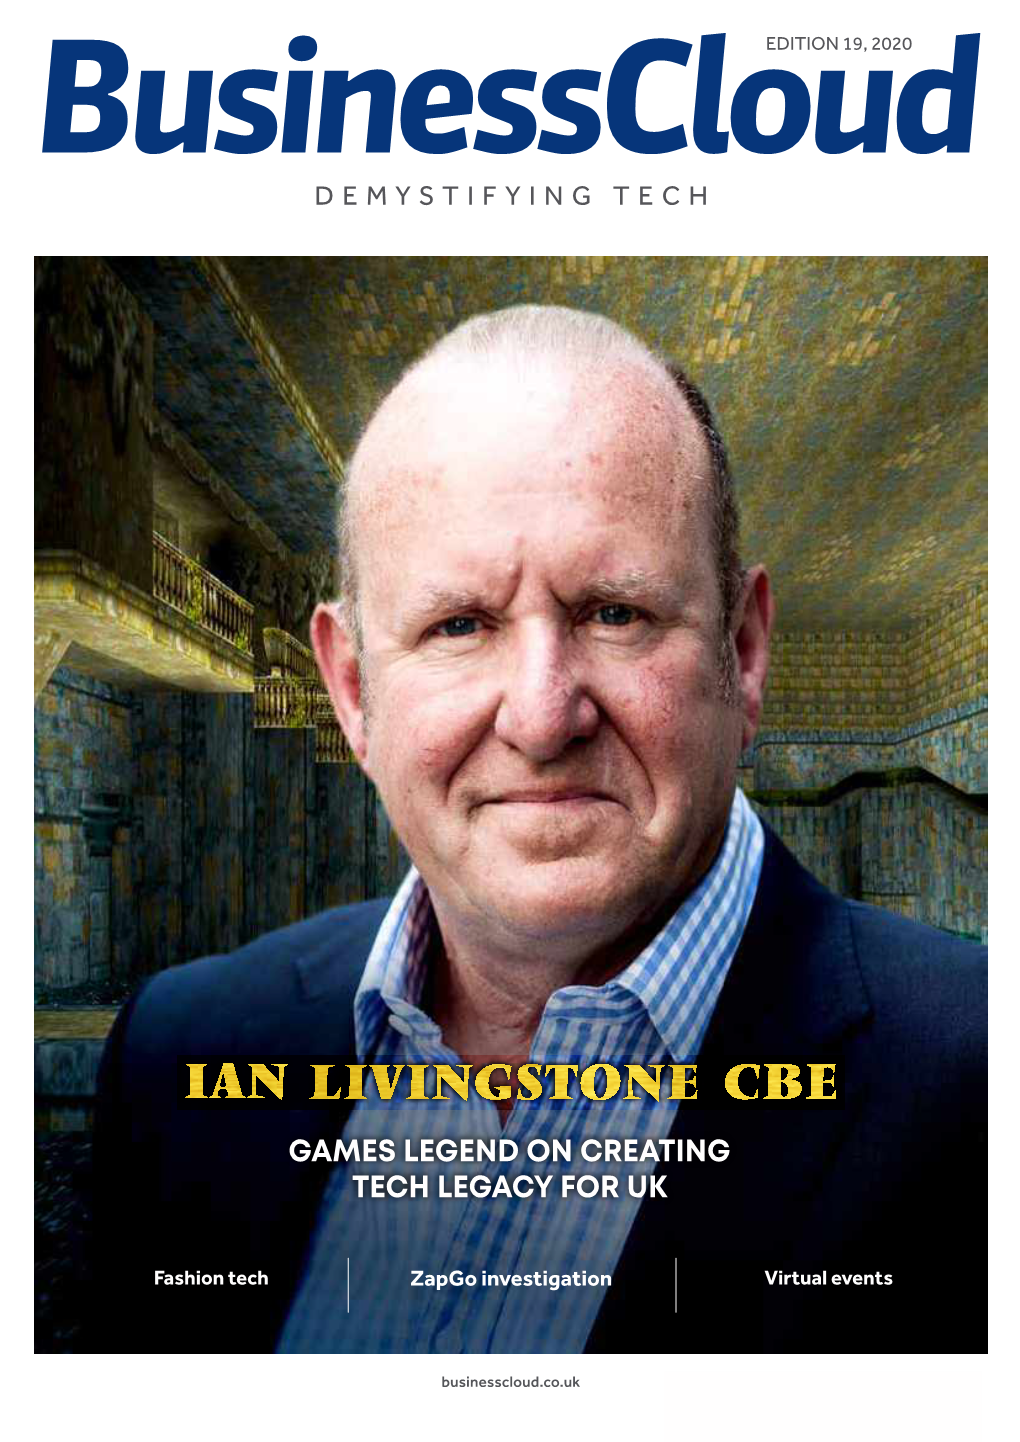 Ian Livingstone CBE: Games Legend on Creating Tech Legacy for UK